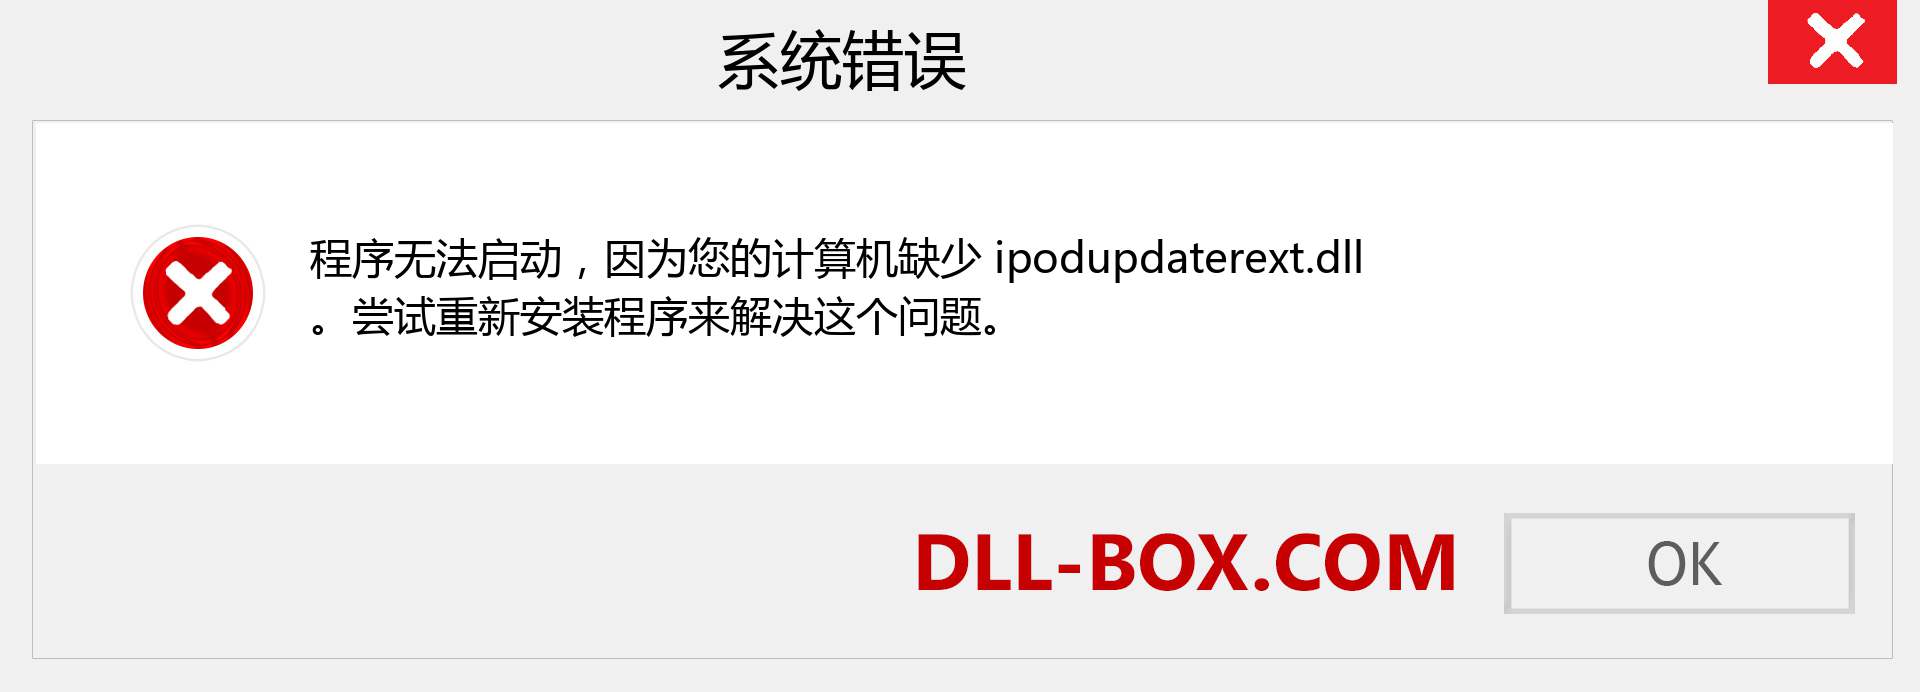 ipodupdaterext.dll 文件丢失？。 适用于 Windows 7、8、10 的下载 - 修复 Windows、照片、图像上的 ipodupdaterext dll 丢失错误